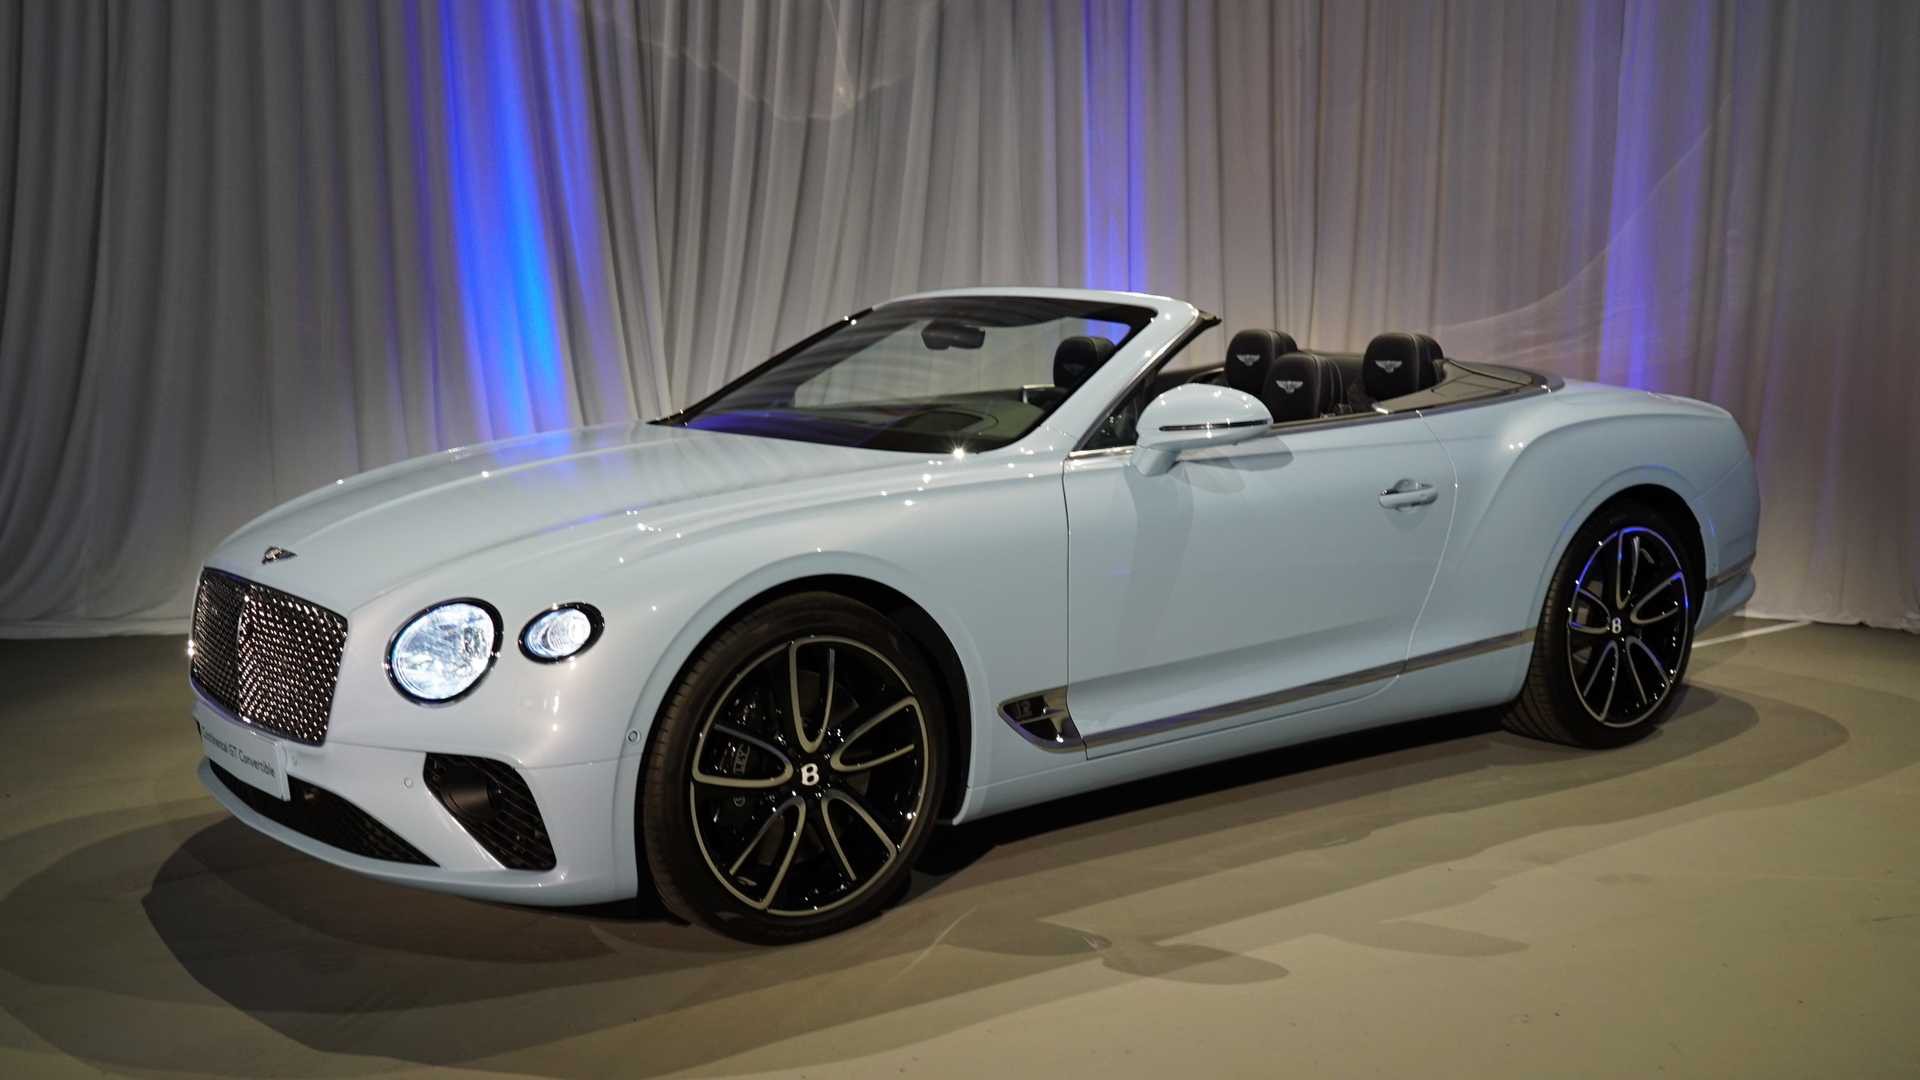 Bentley Bacalar  xe mui trần giá 19 triệu USD  VnExpress